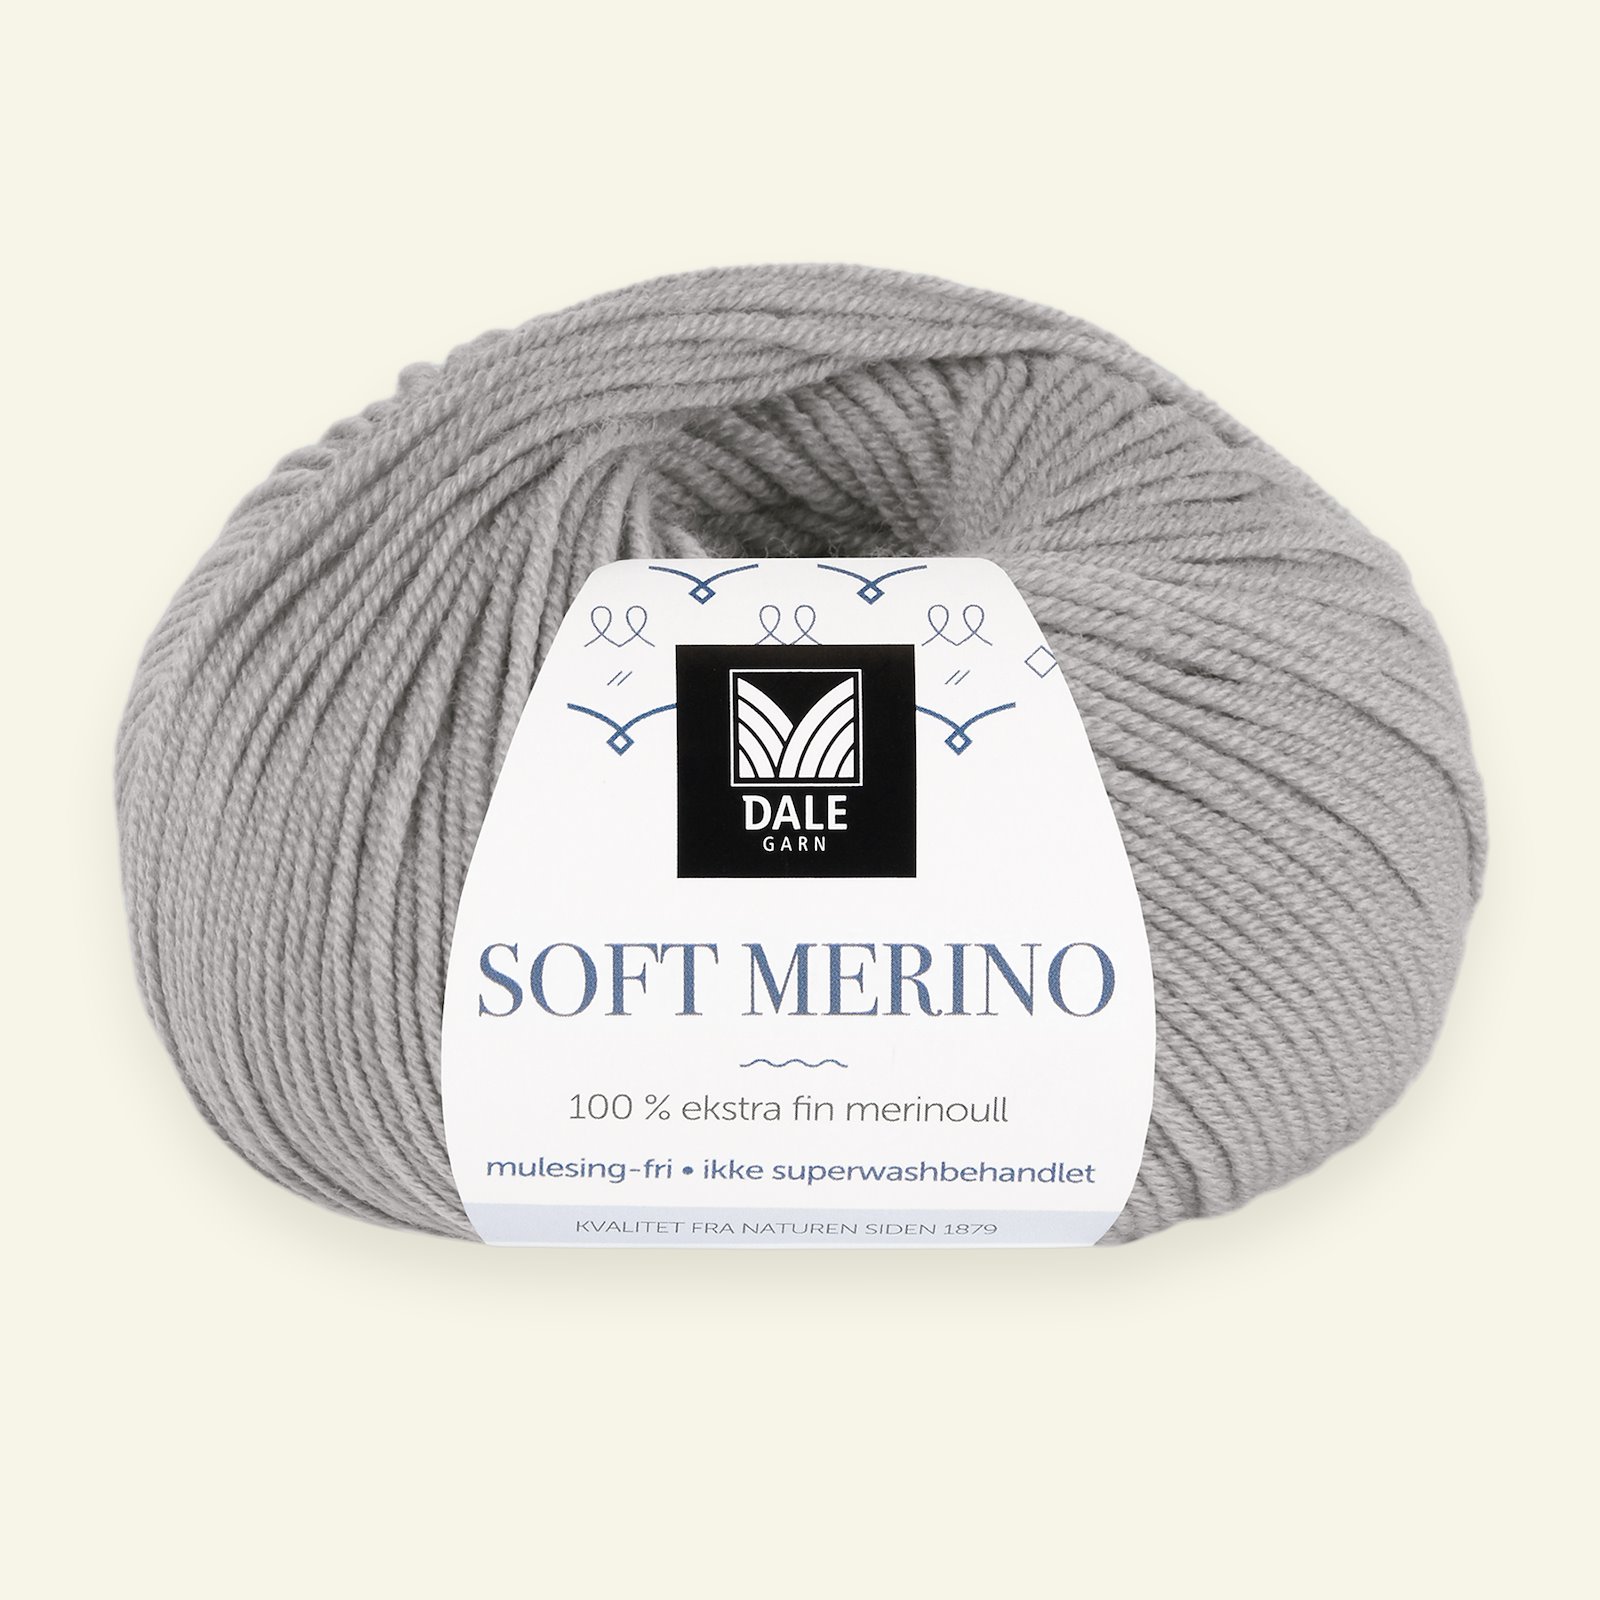 Dale Garn, 100% ekstra fint merinogarn "Soft Merino", lys grå (3035) 90000356_pack